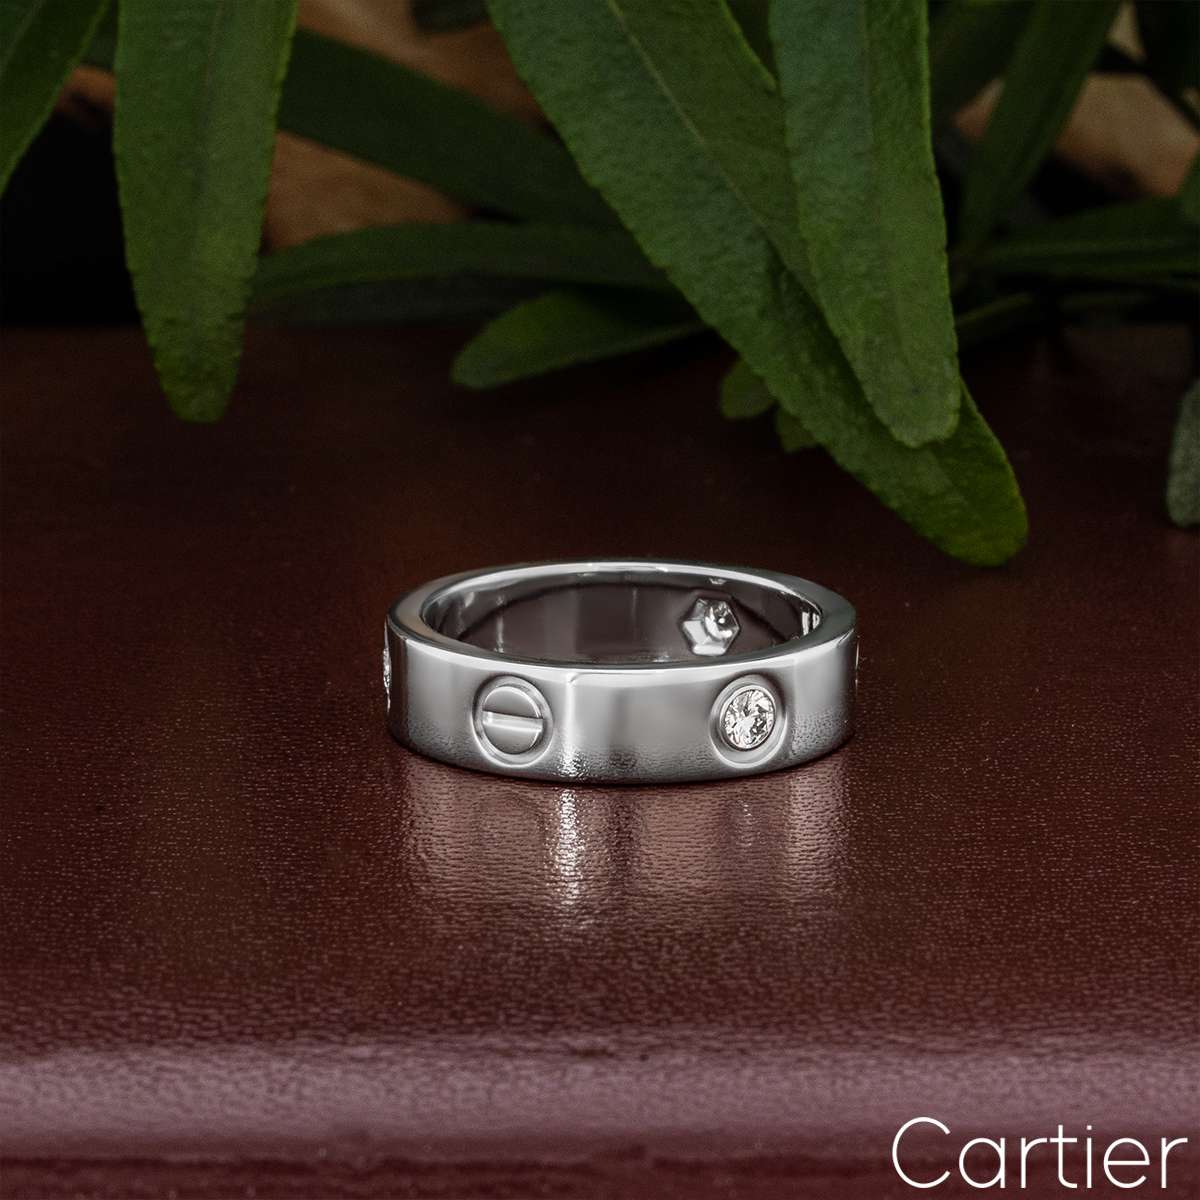 Cartier White Gold Half Diamond Love Ring Size 56 B4032500